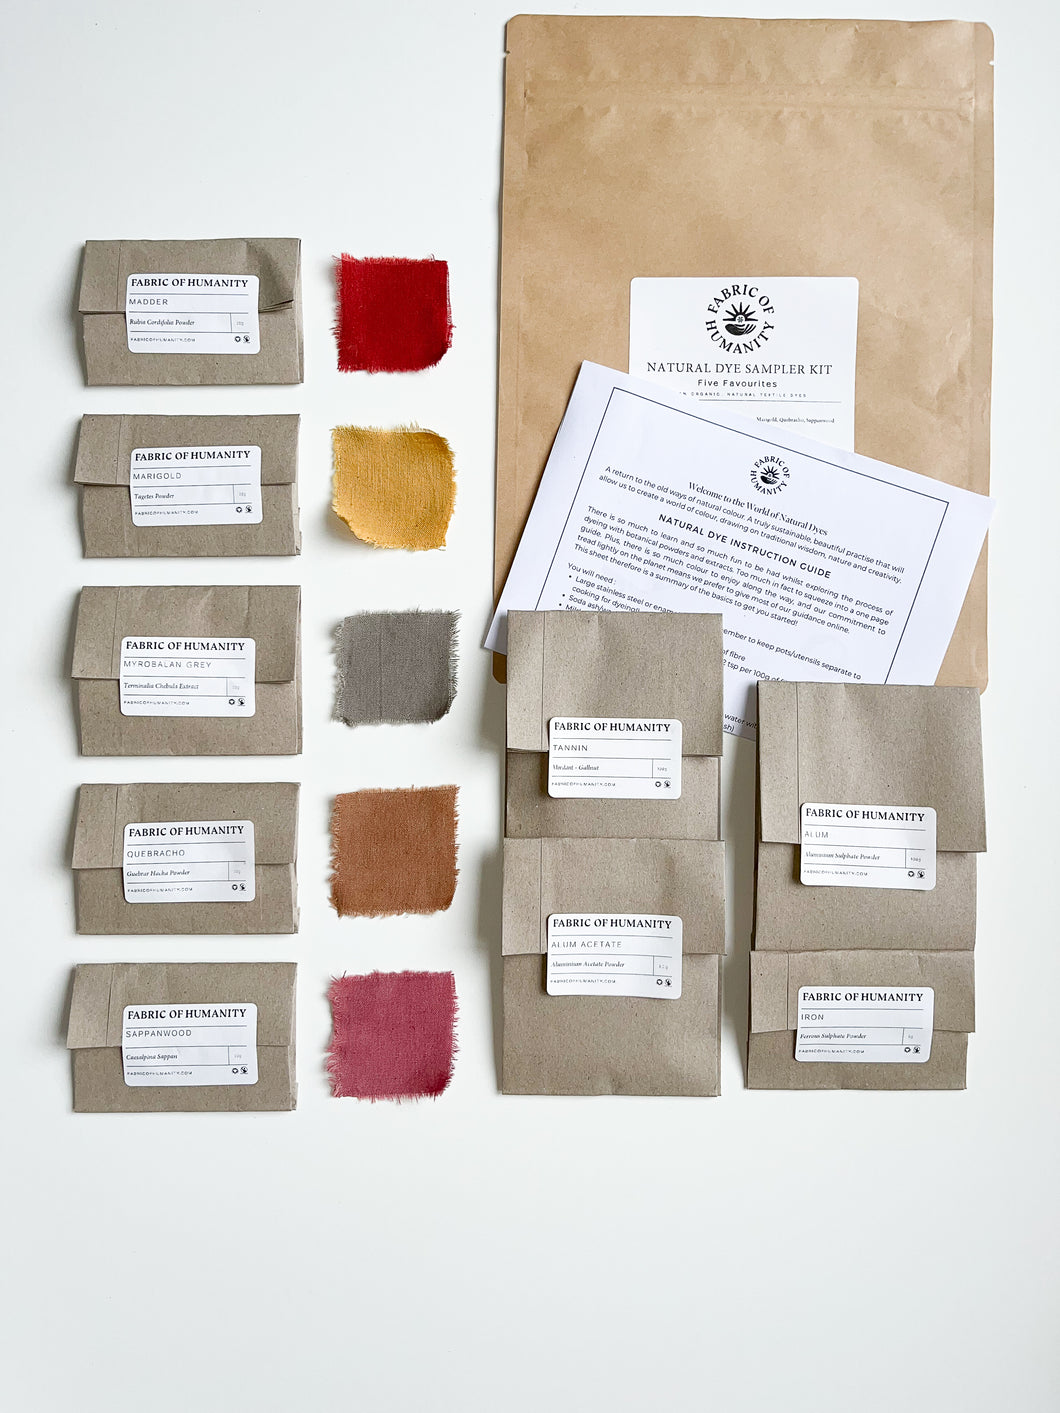 Natural Dye Sampler Kit - Five Favourites